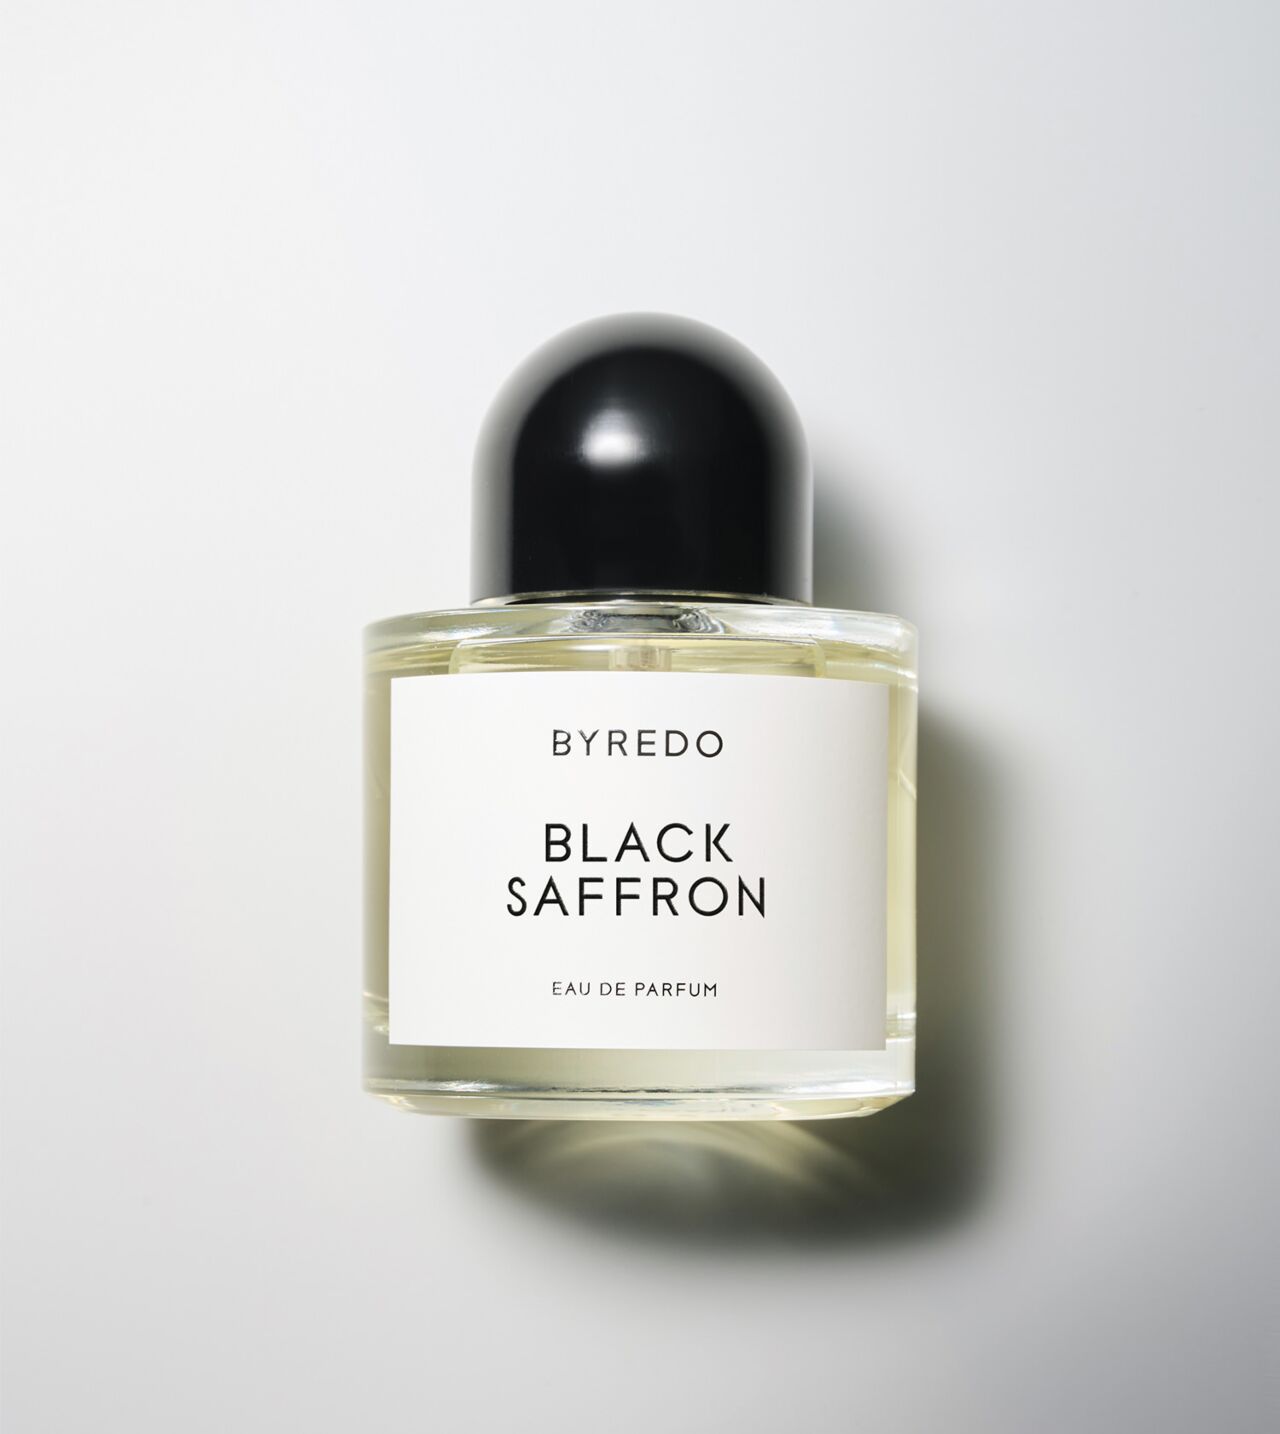 Black Saffron Byredo for women and men